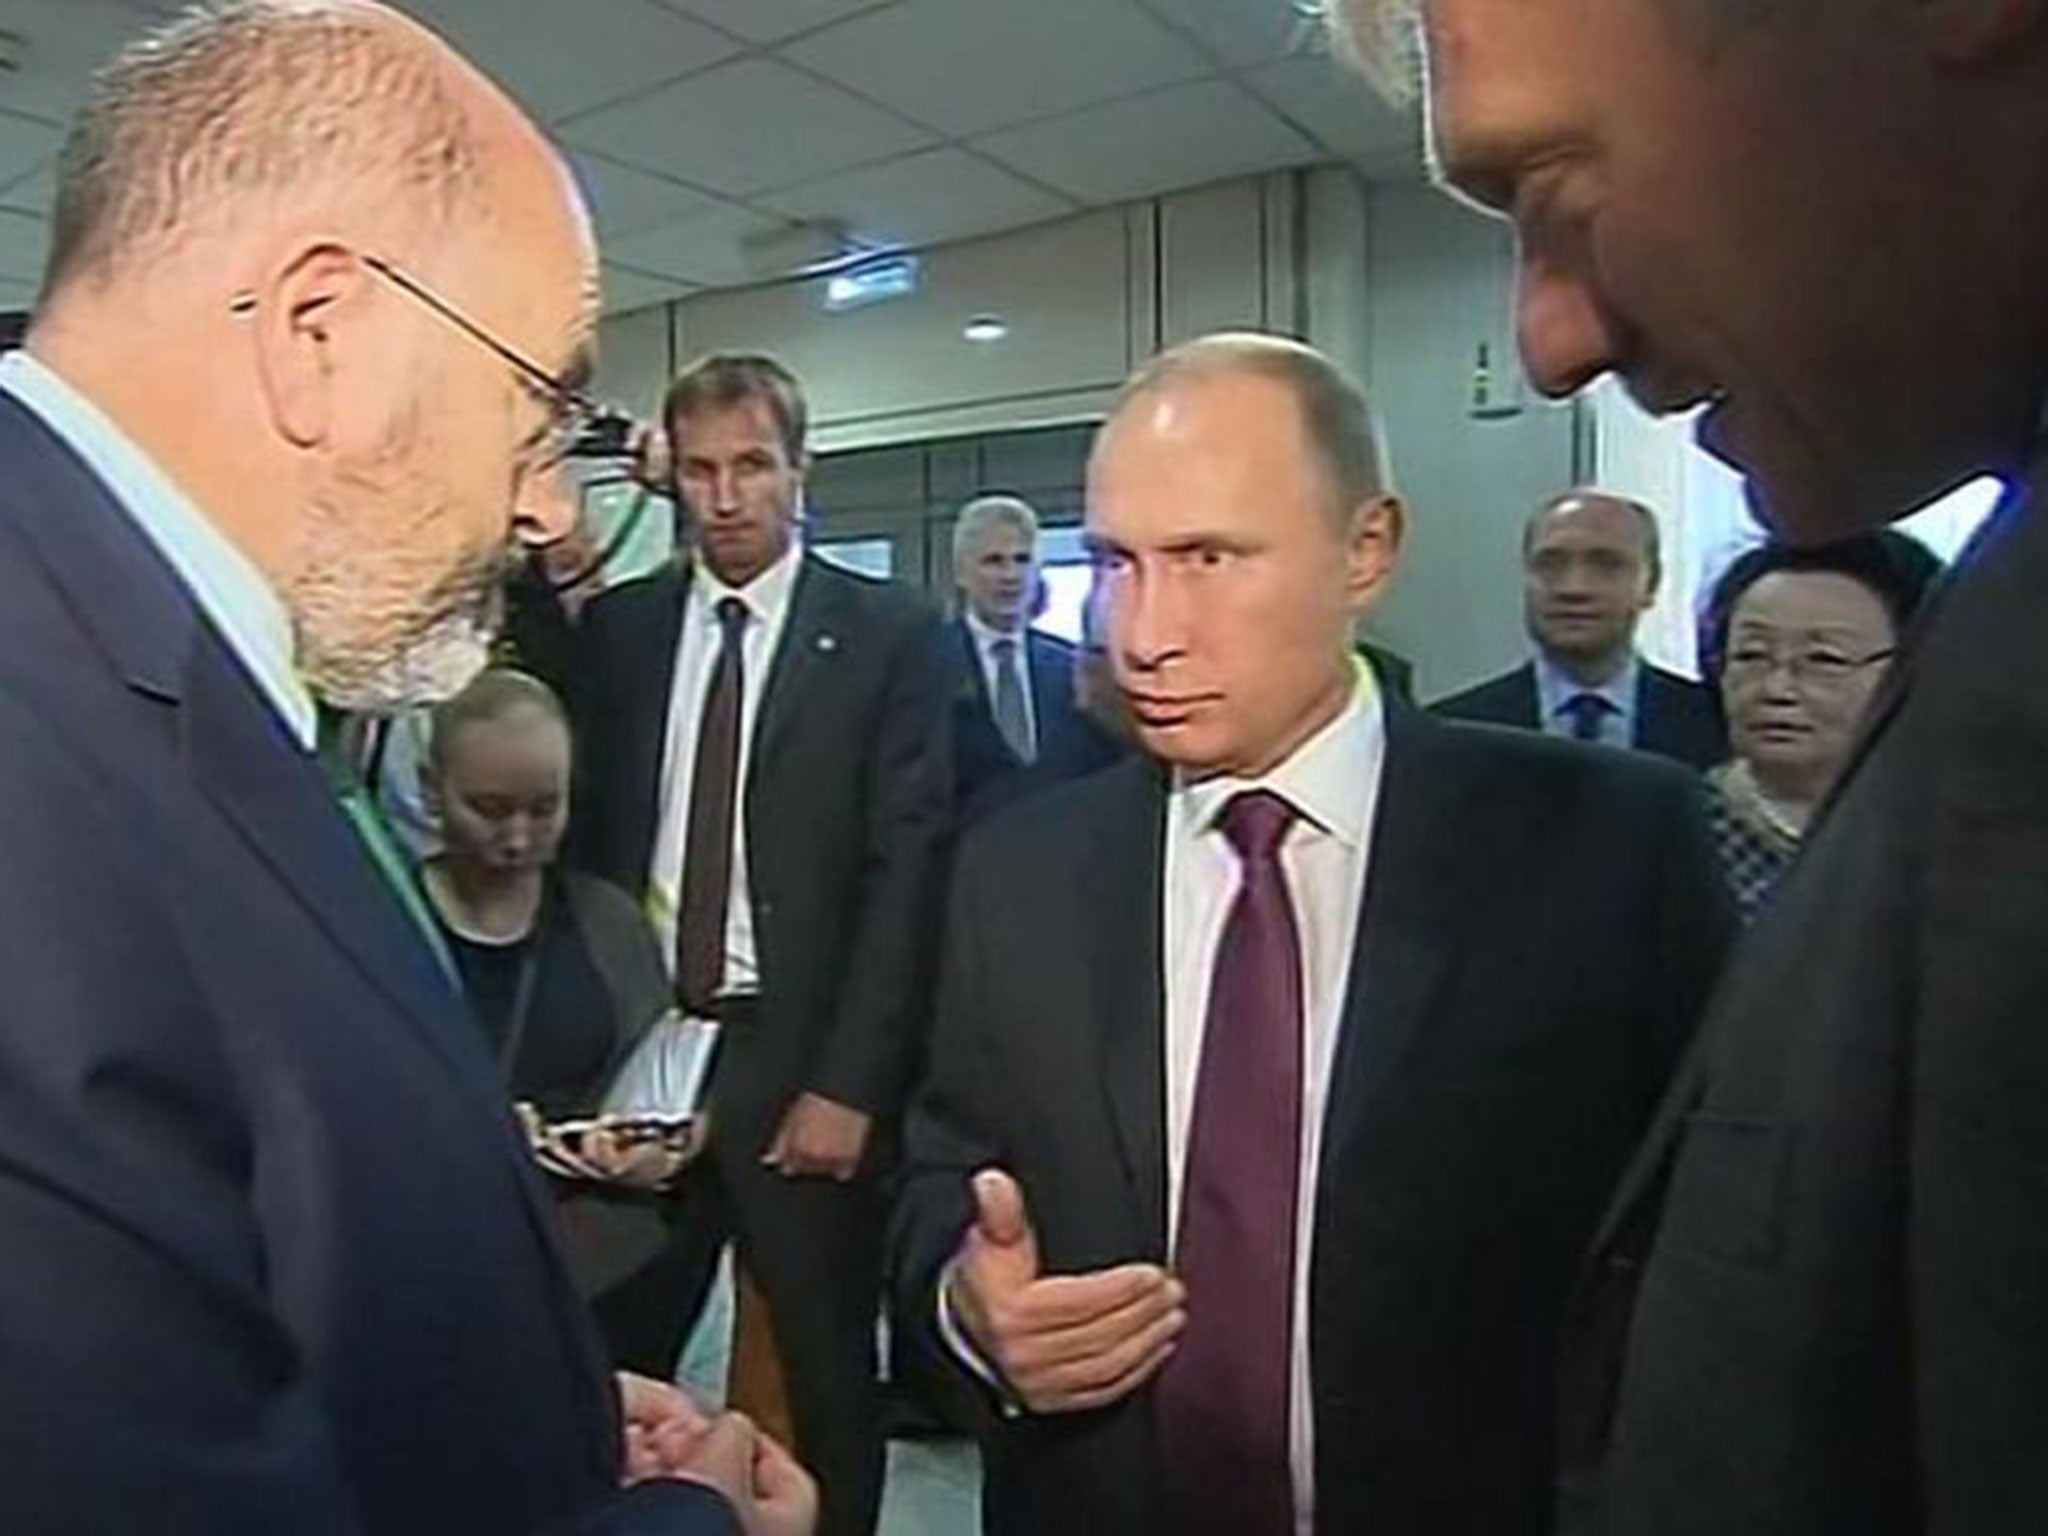 John Sweeney doorstepped the Russian President asking
him whether he “regrets the killings in Ukraine”